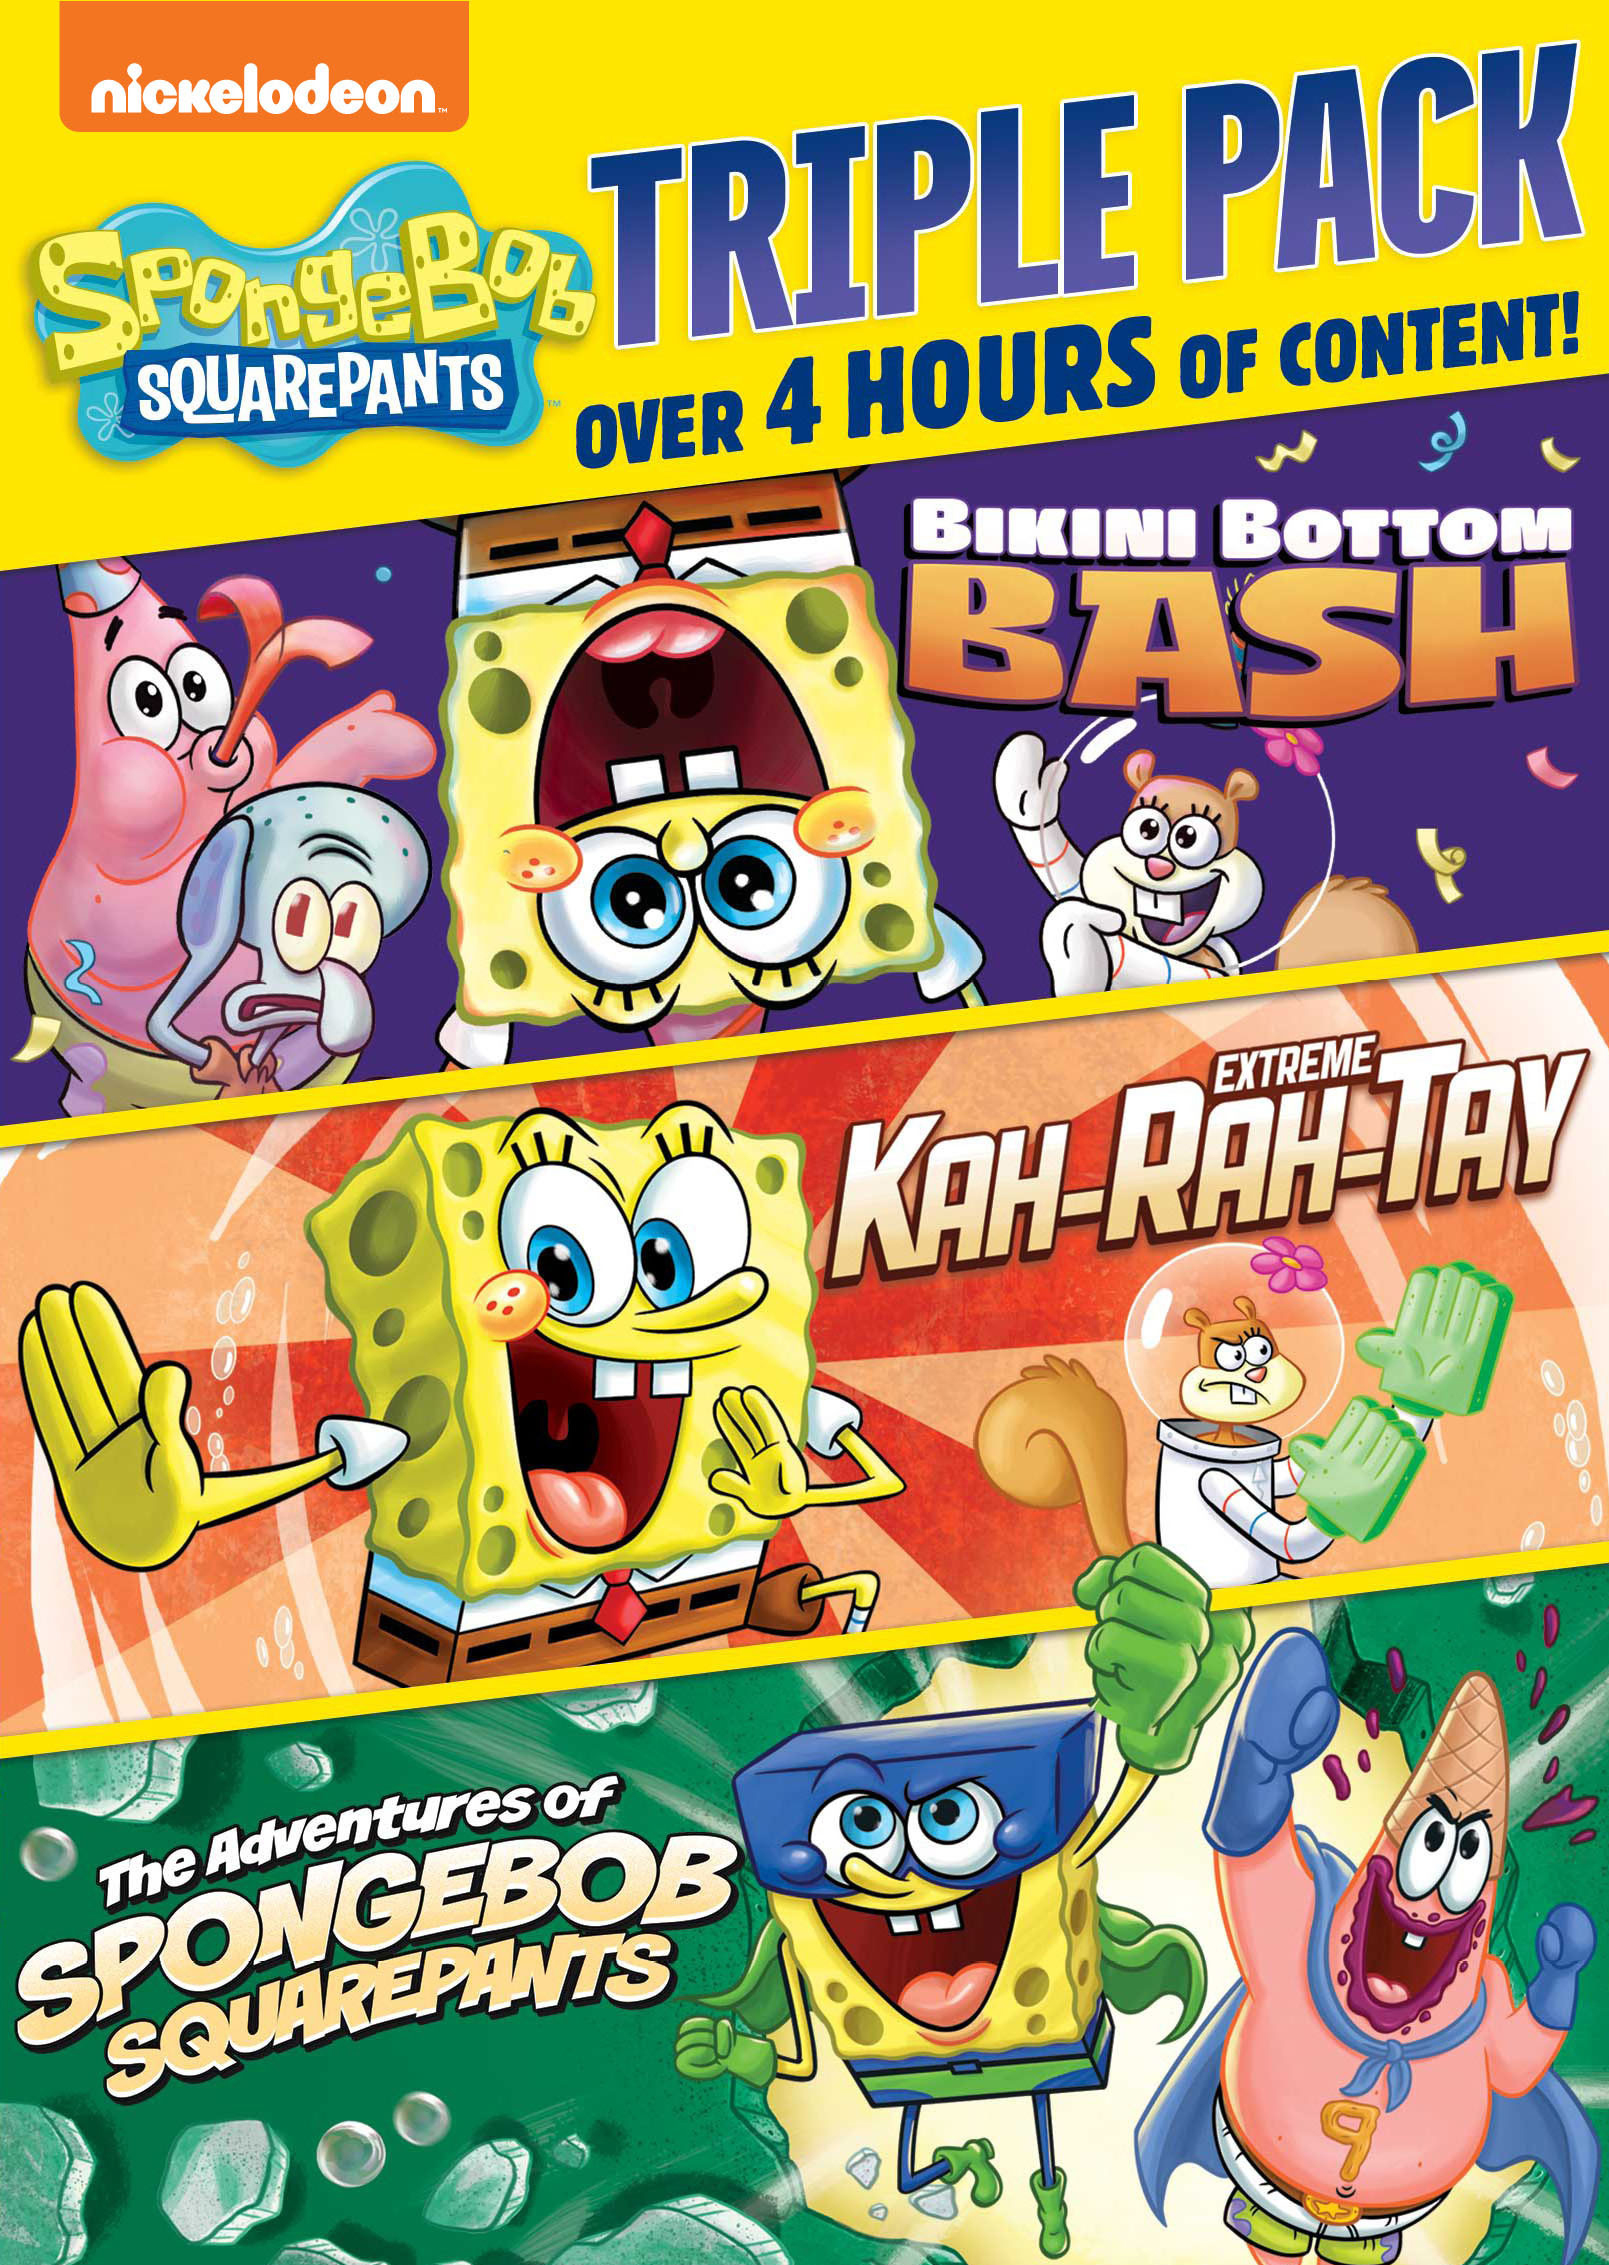 aplausos Empuje Hacer SpongeBob SquarePants Triple Pack: Bikini Bottom Bash/Extreme  Kah-Rah-Tay/Adventures [DVD] - Best Buy